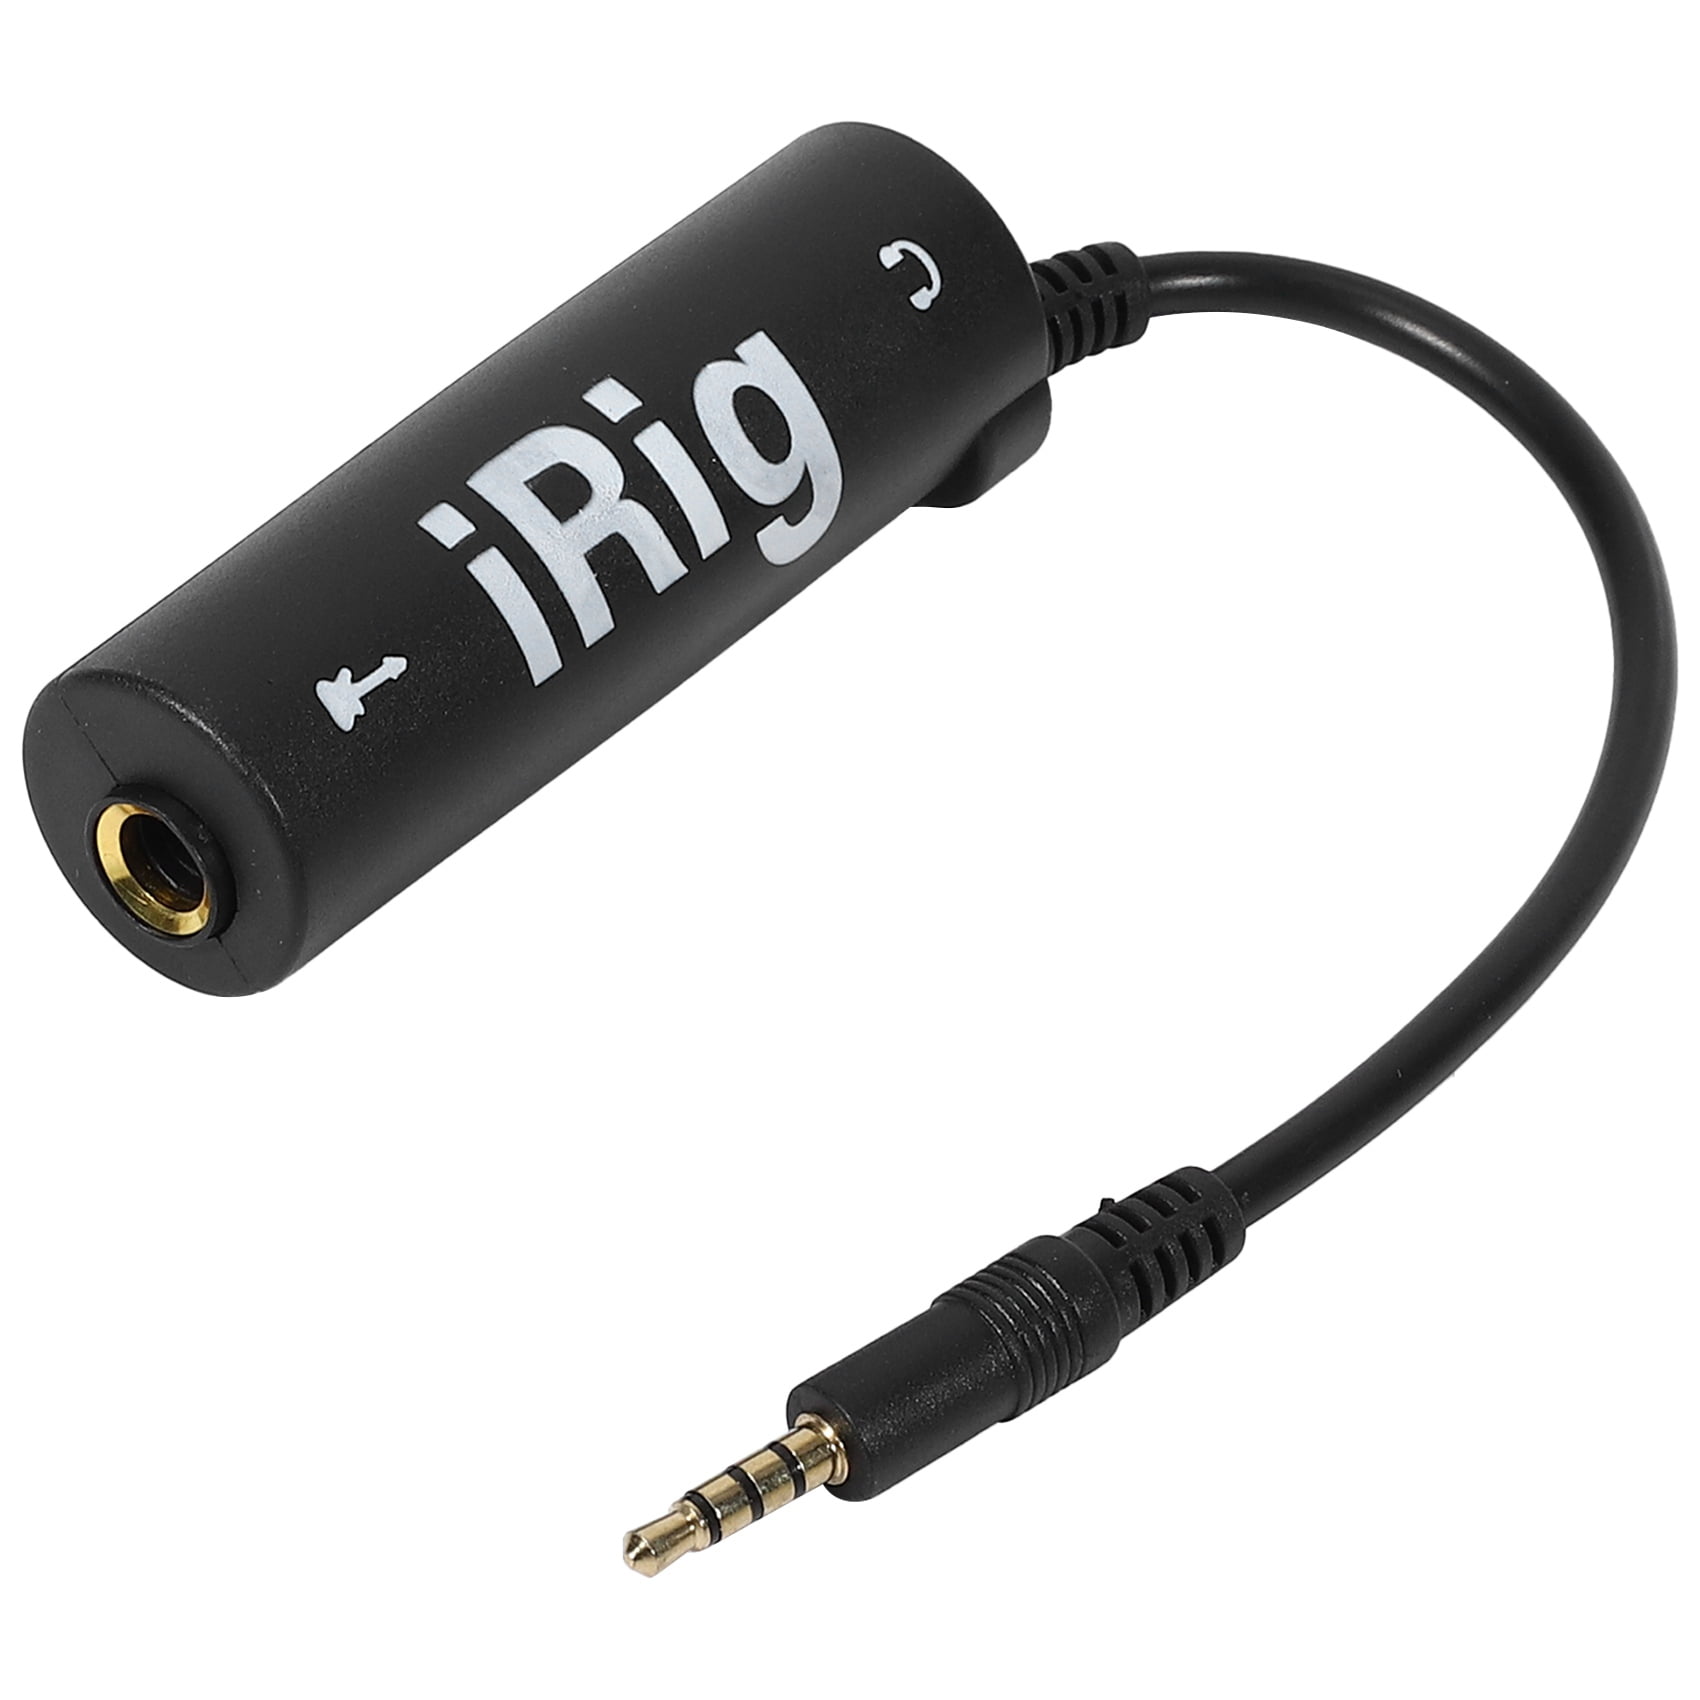 Guitar Interface Irig Converter Replacement Adapter Black for Phone Guitar Audio Interface